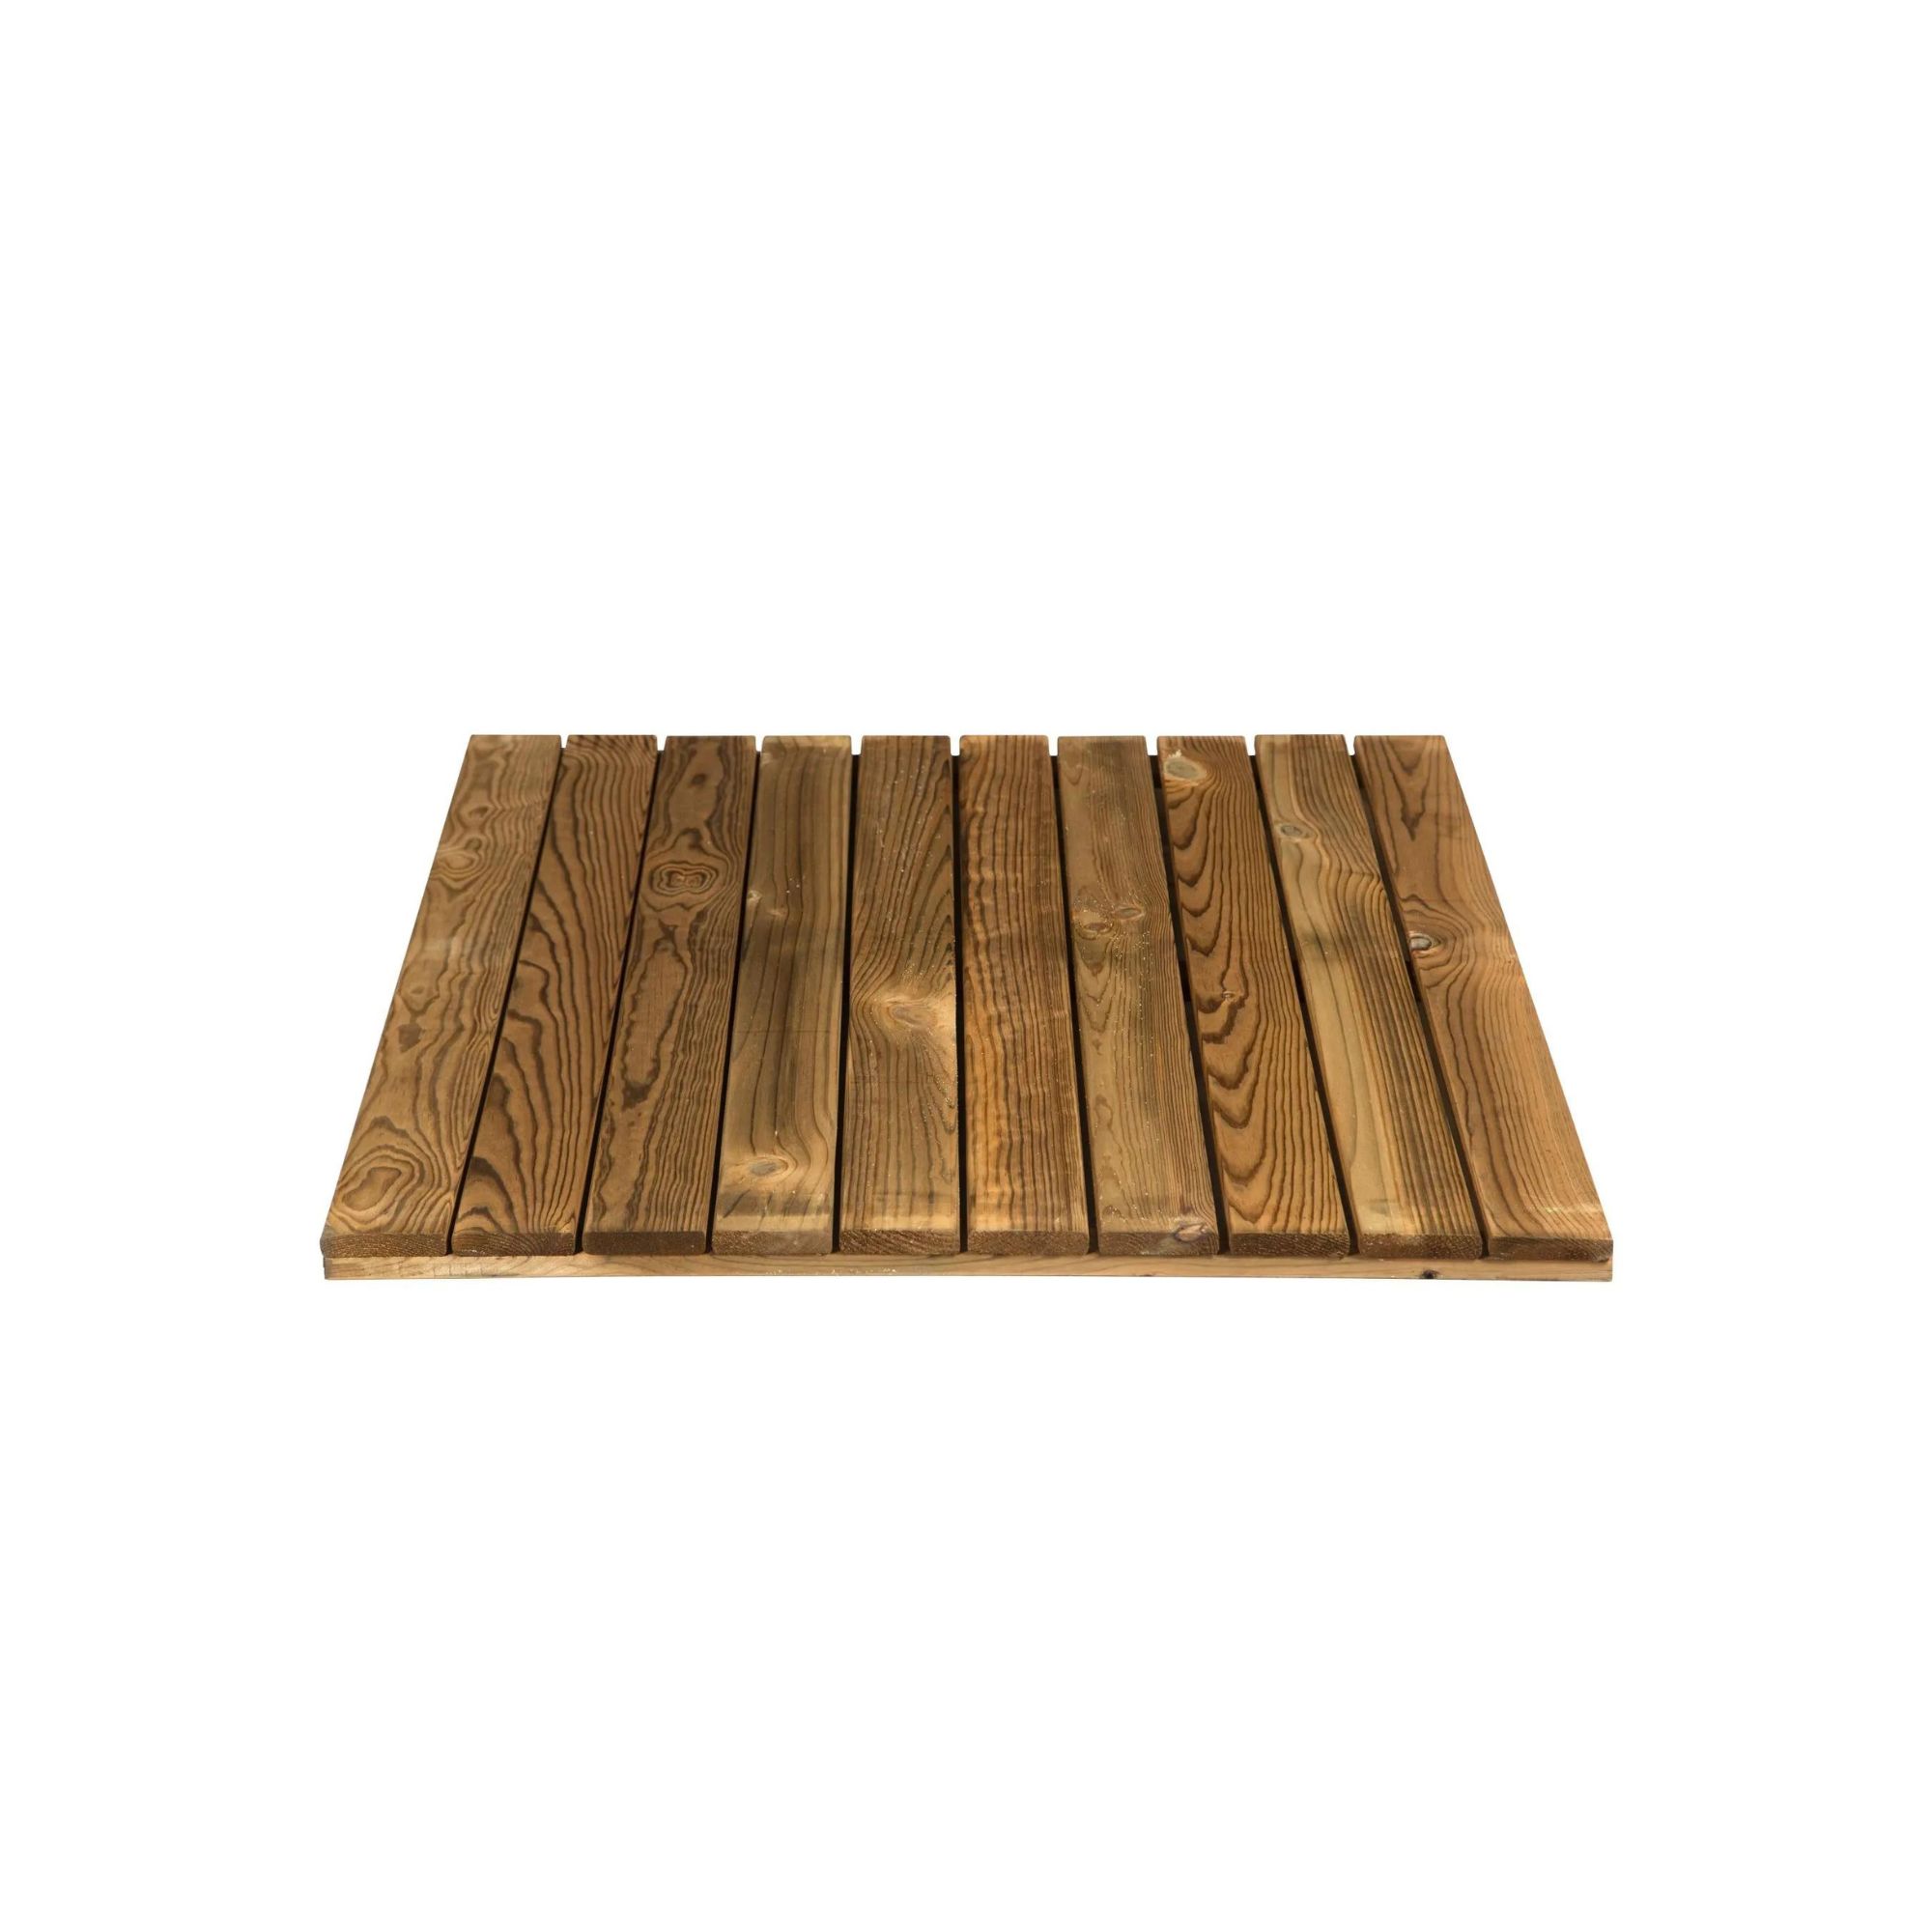 Lajeta madeira pinho tratado cor marron100x100cm 514 Boleni